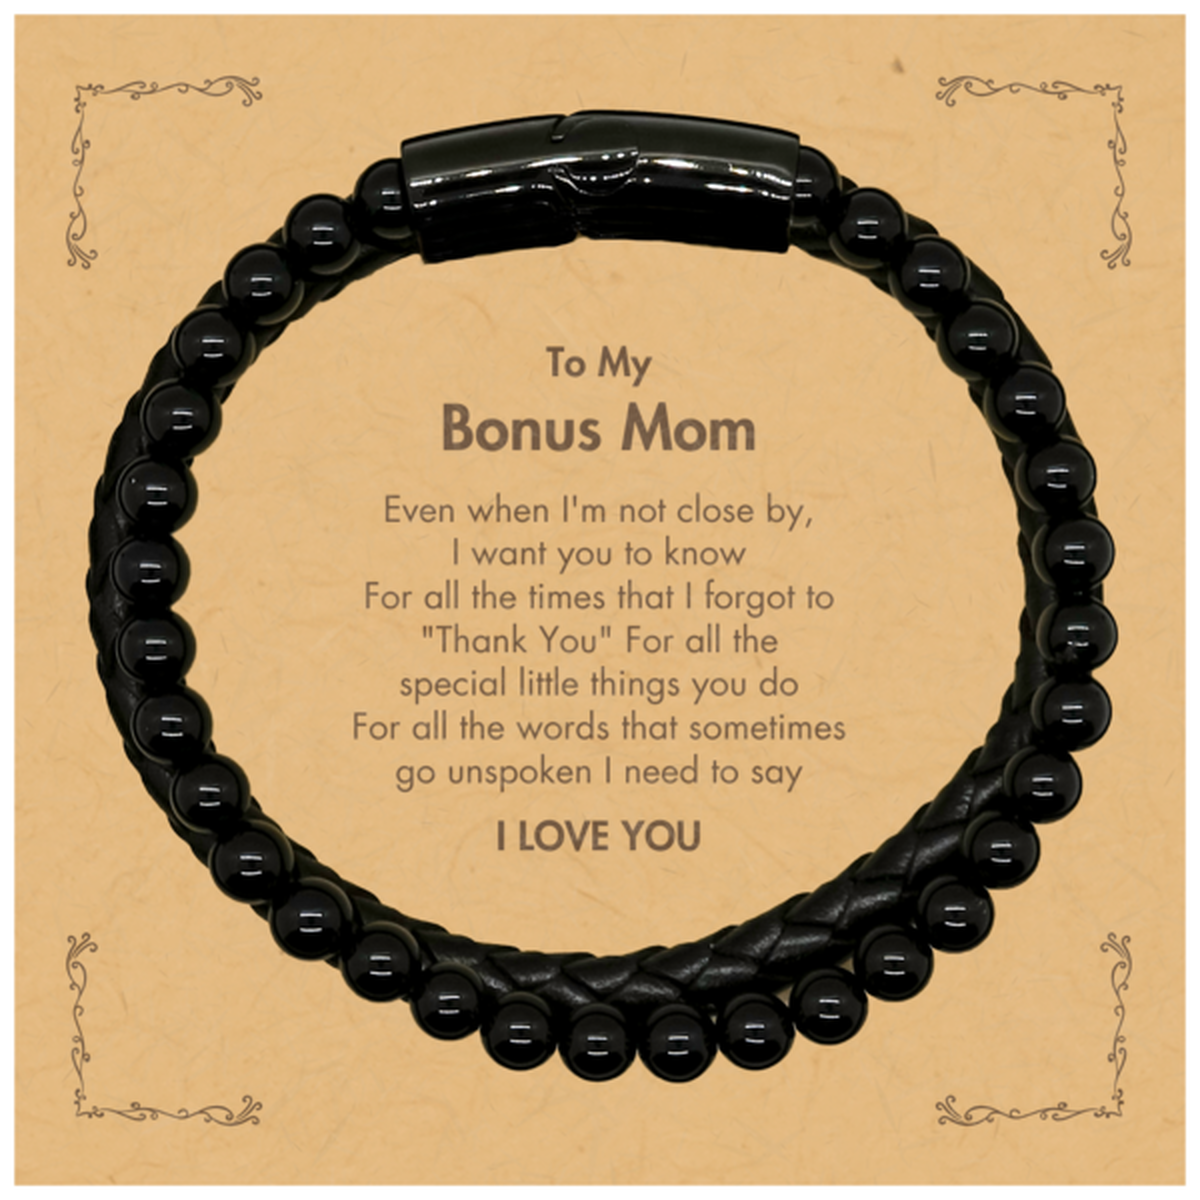 Thank You Gifts for Bonus Mom, Keepsake Stone Leather Bracelets Gifts for Bonus Mom Birthday Mother's day Father's Day Bonus Mom For all the words That sometimes go unspoken I need to say I LOVE YOU